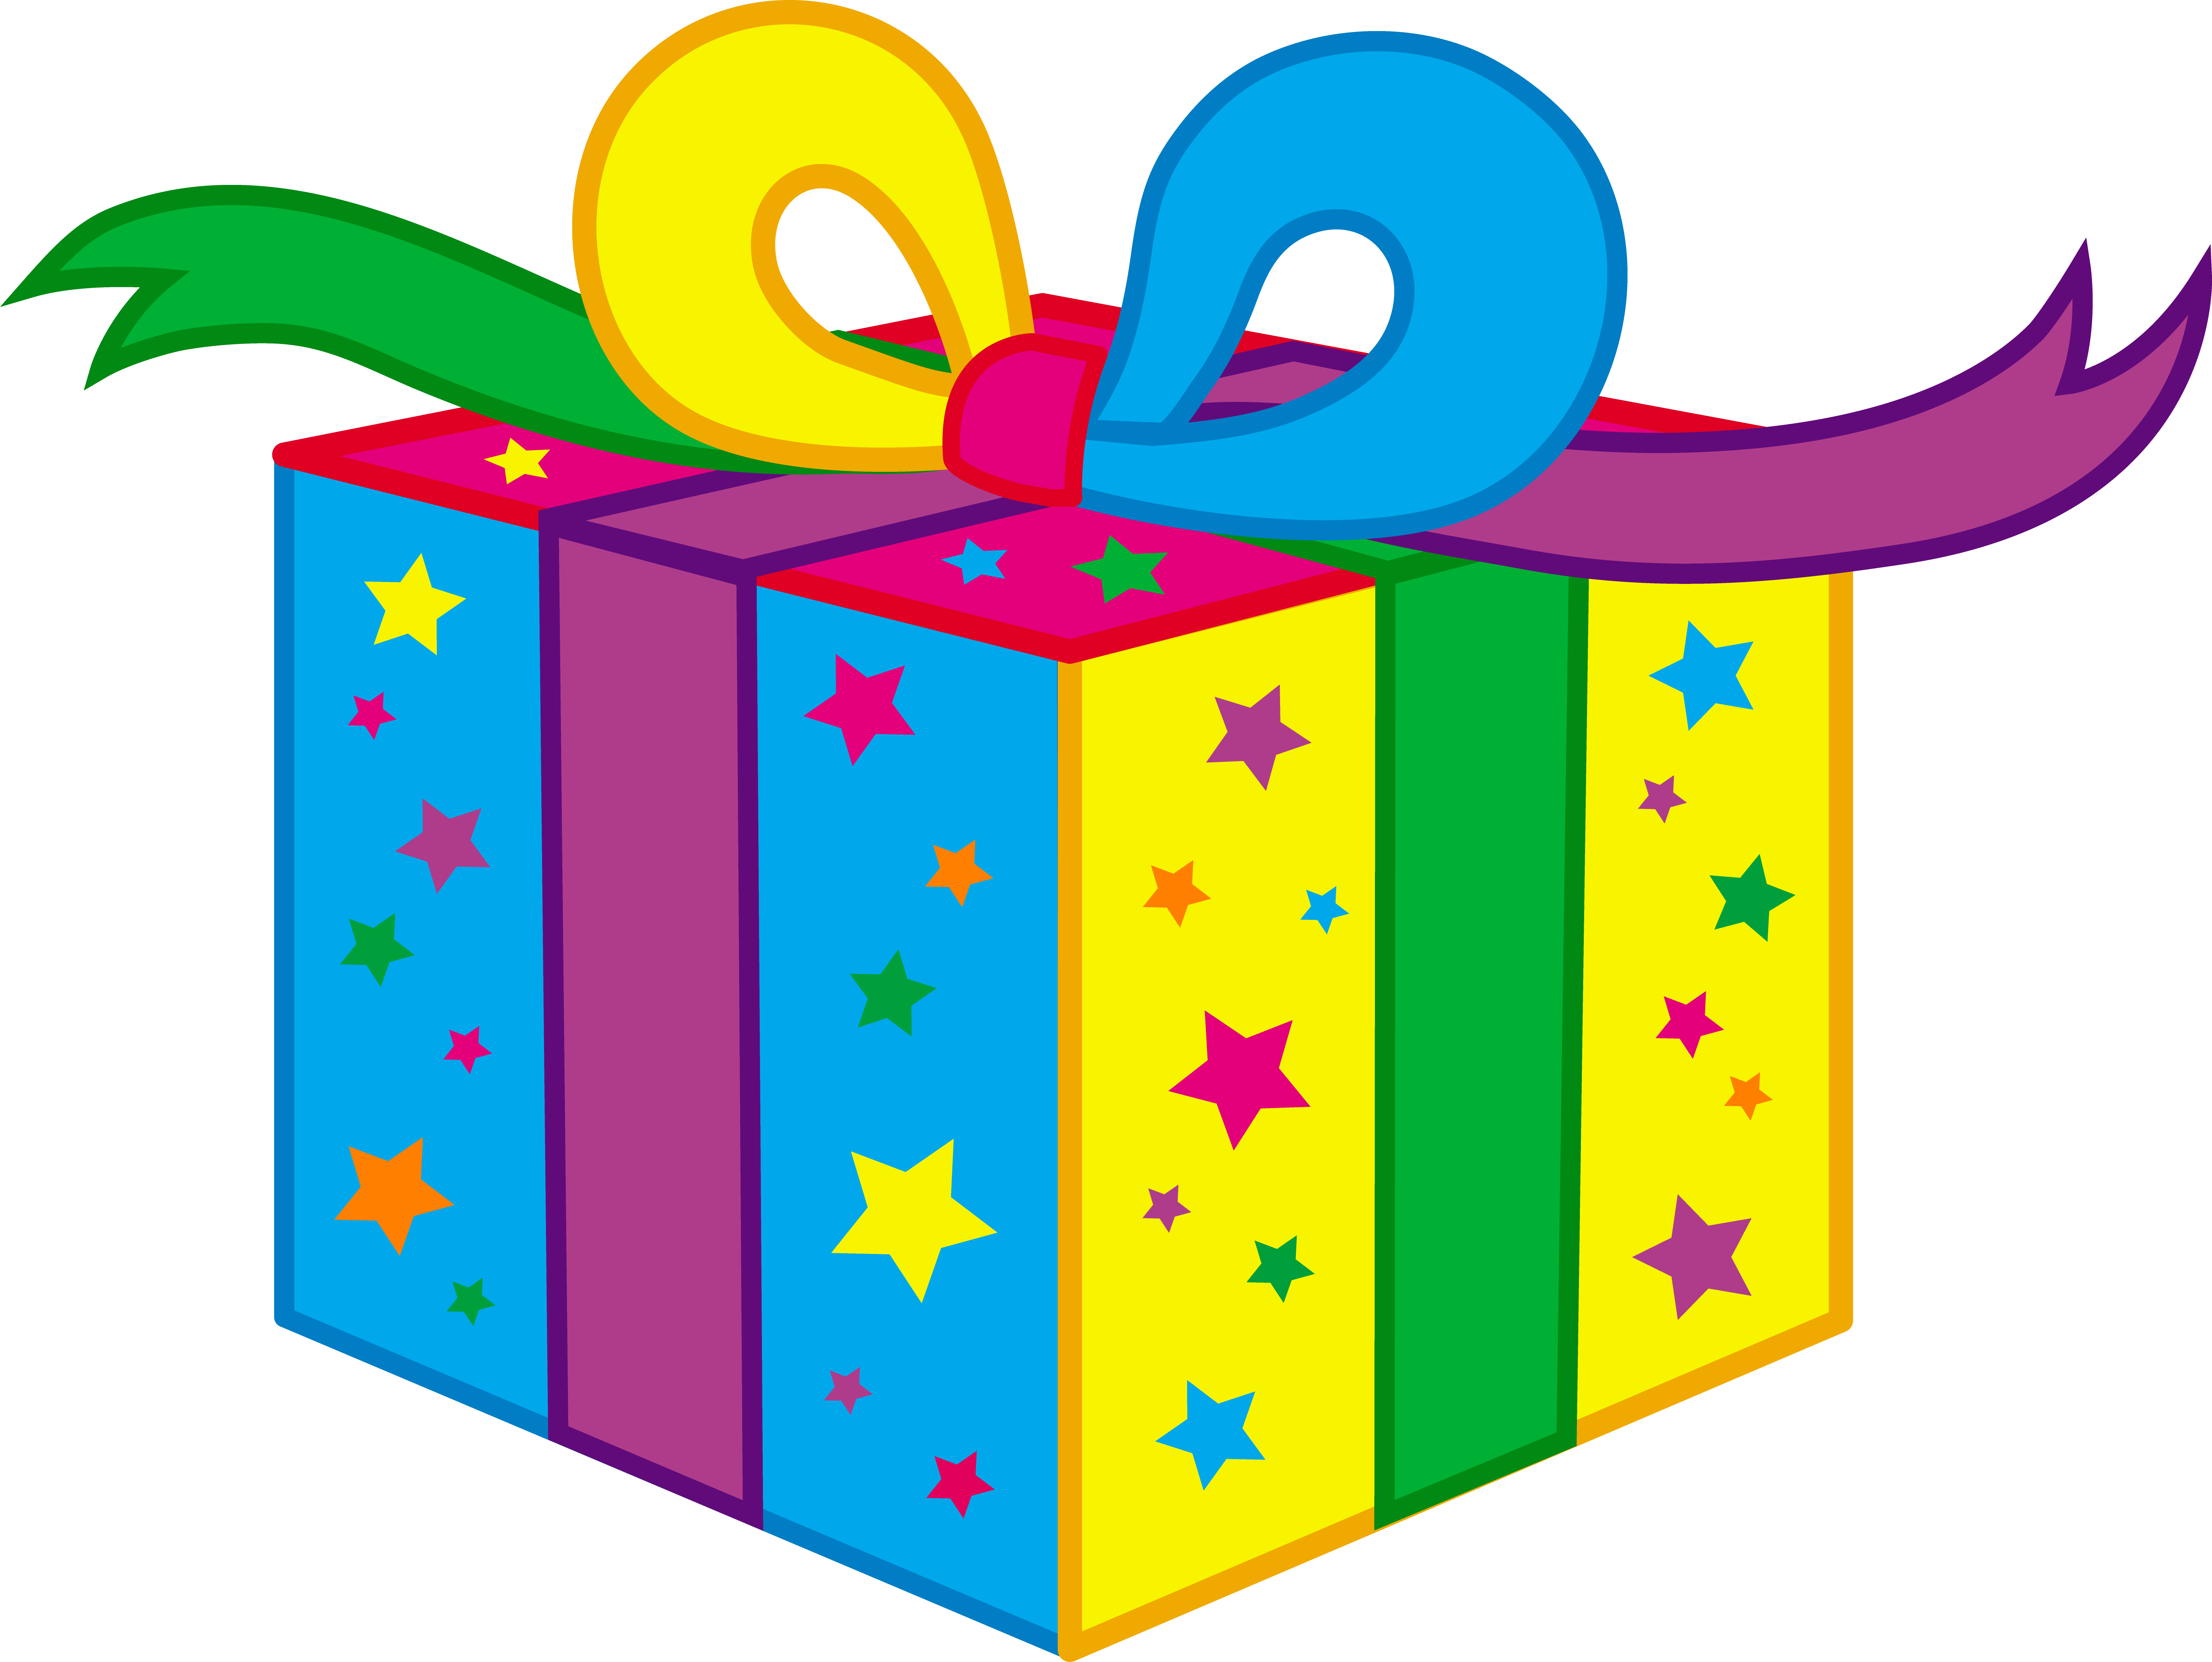 Birthday Gift Box Free Vector